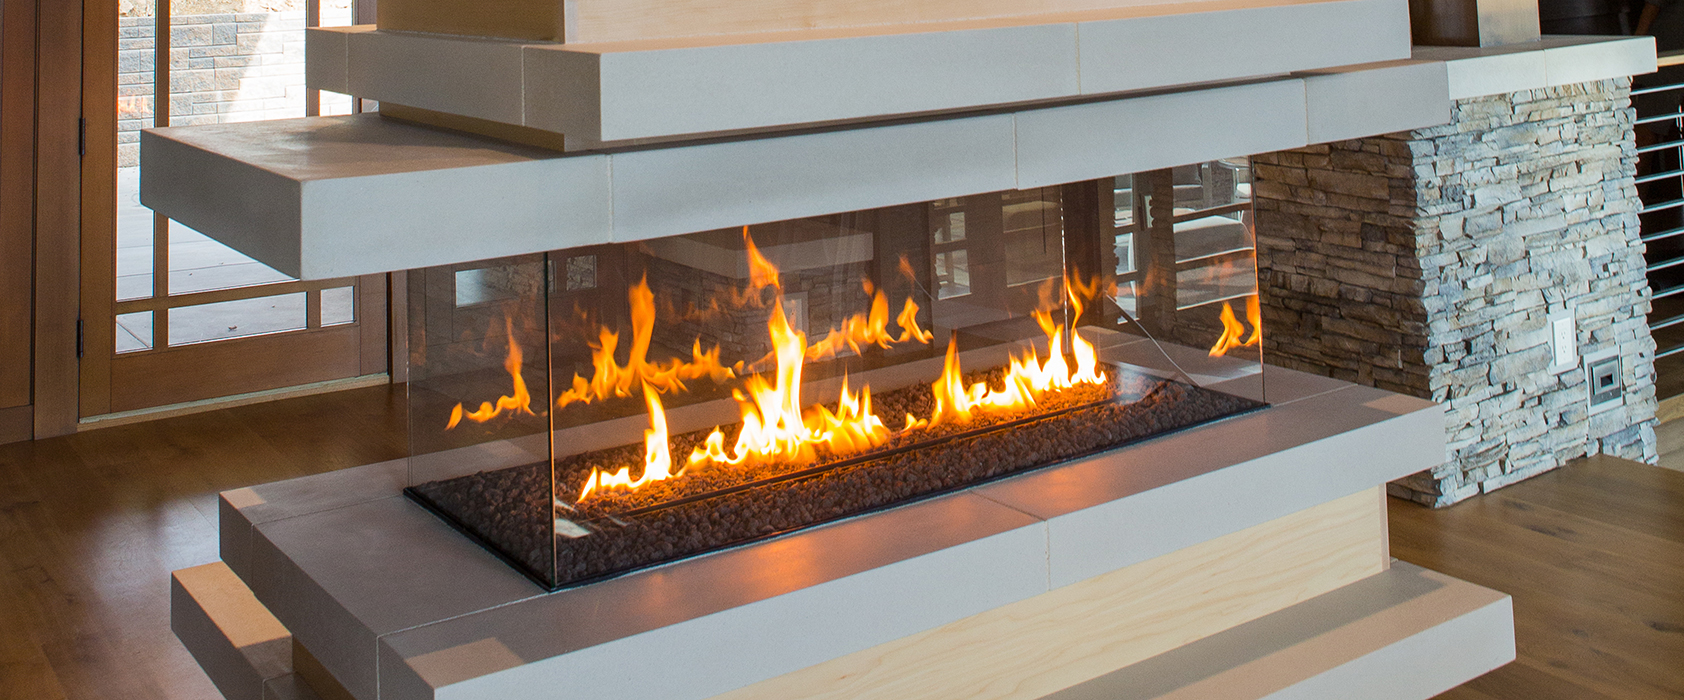 four-sided custom fireplace